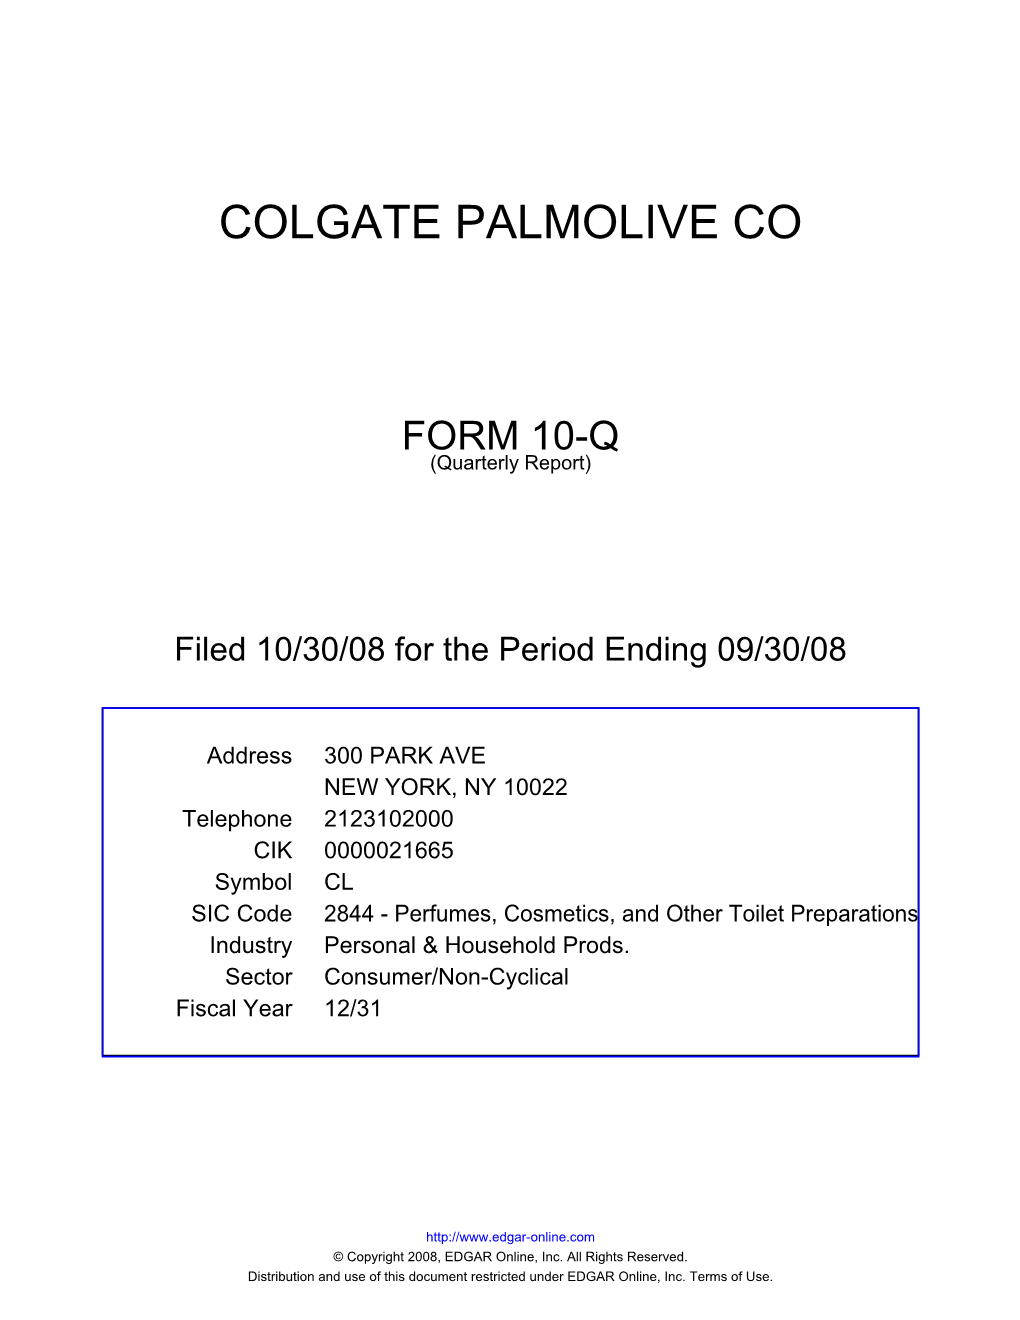 Colgate Palmolive Co